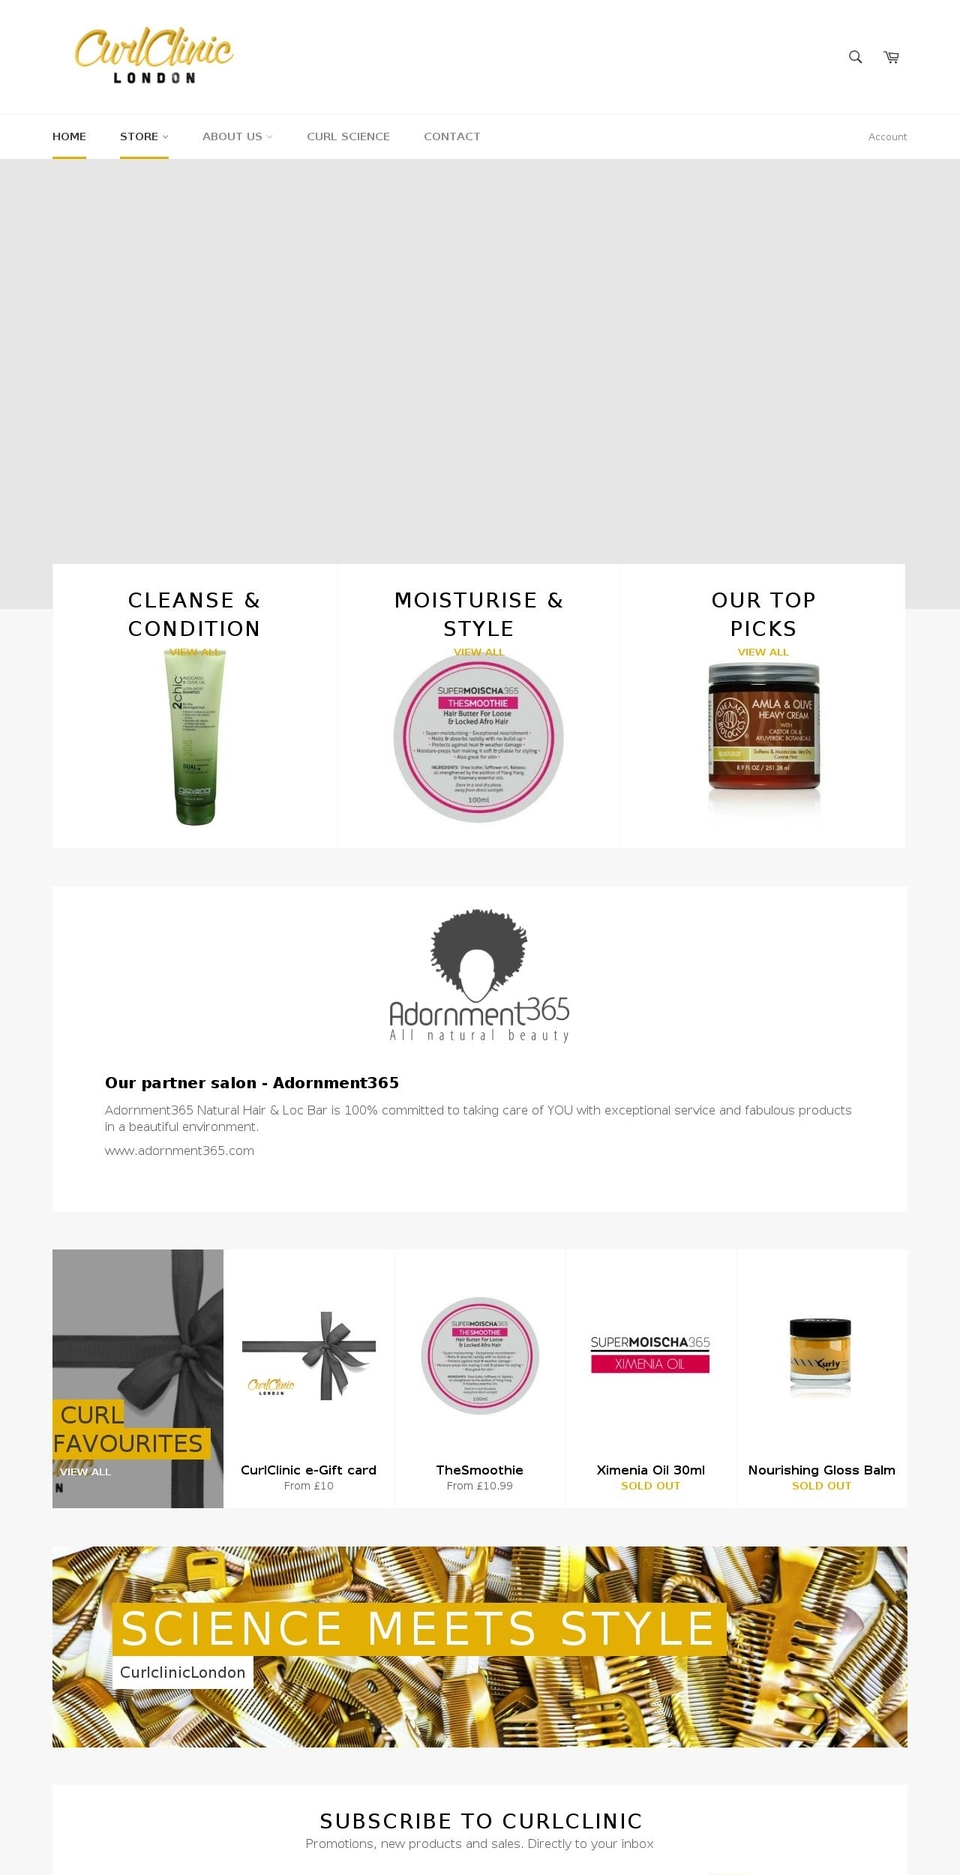 curlclinic.london shopify website screenshot